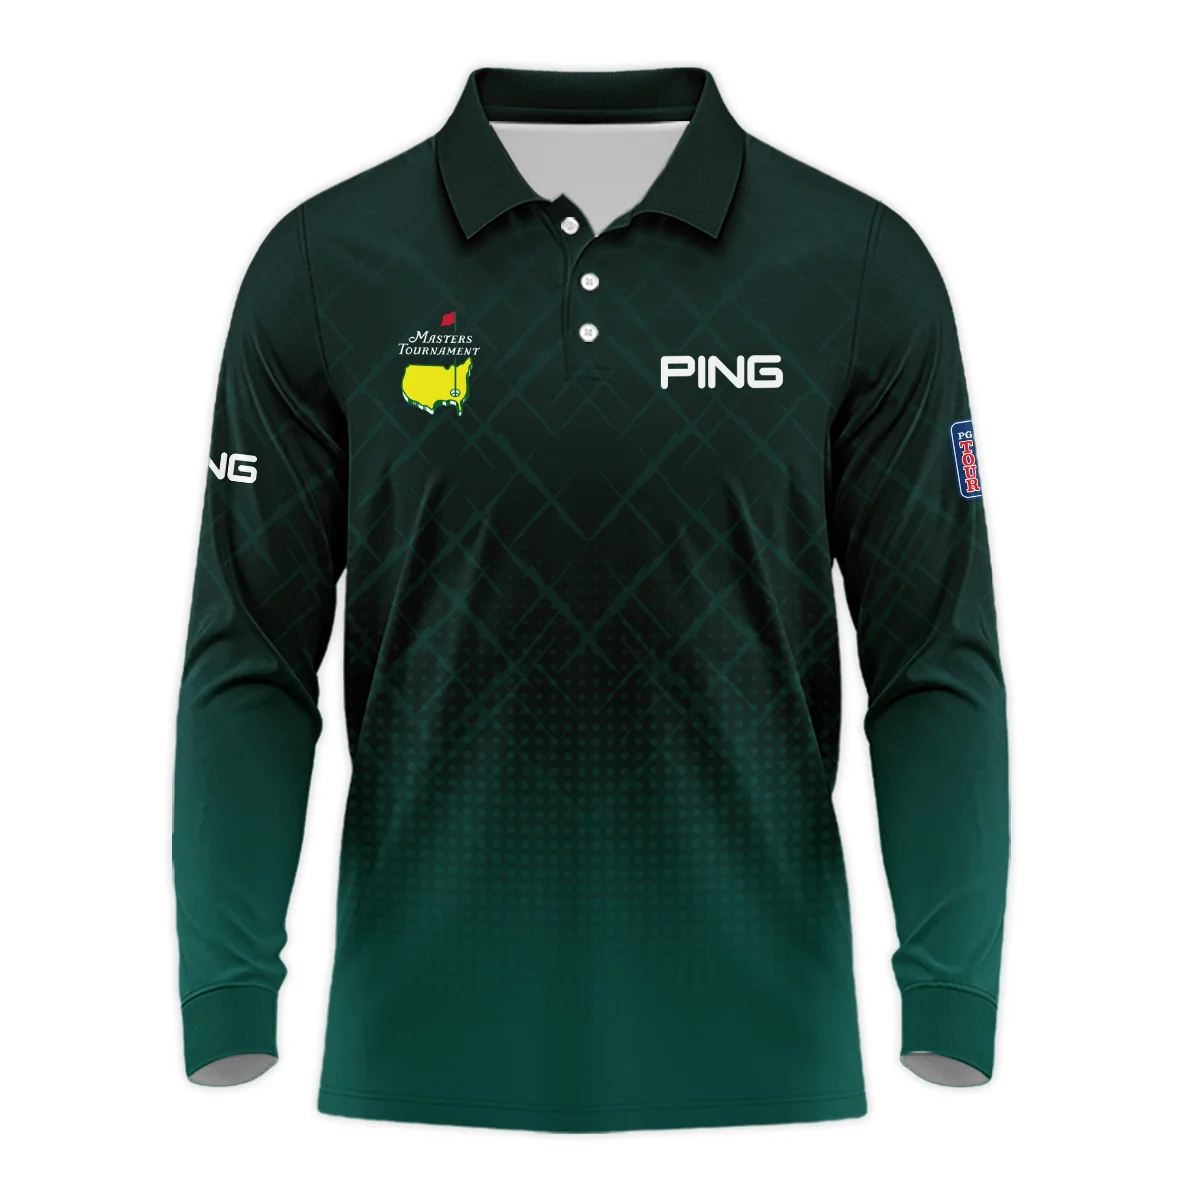 Ping Masters Tournament Sport Jersey Pattern Dark Green Hoodie Shirt Style Classic Hoodie Shirt